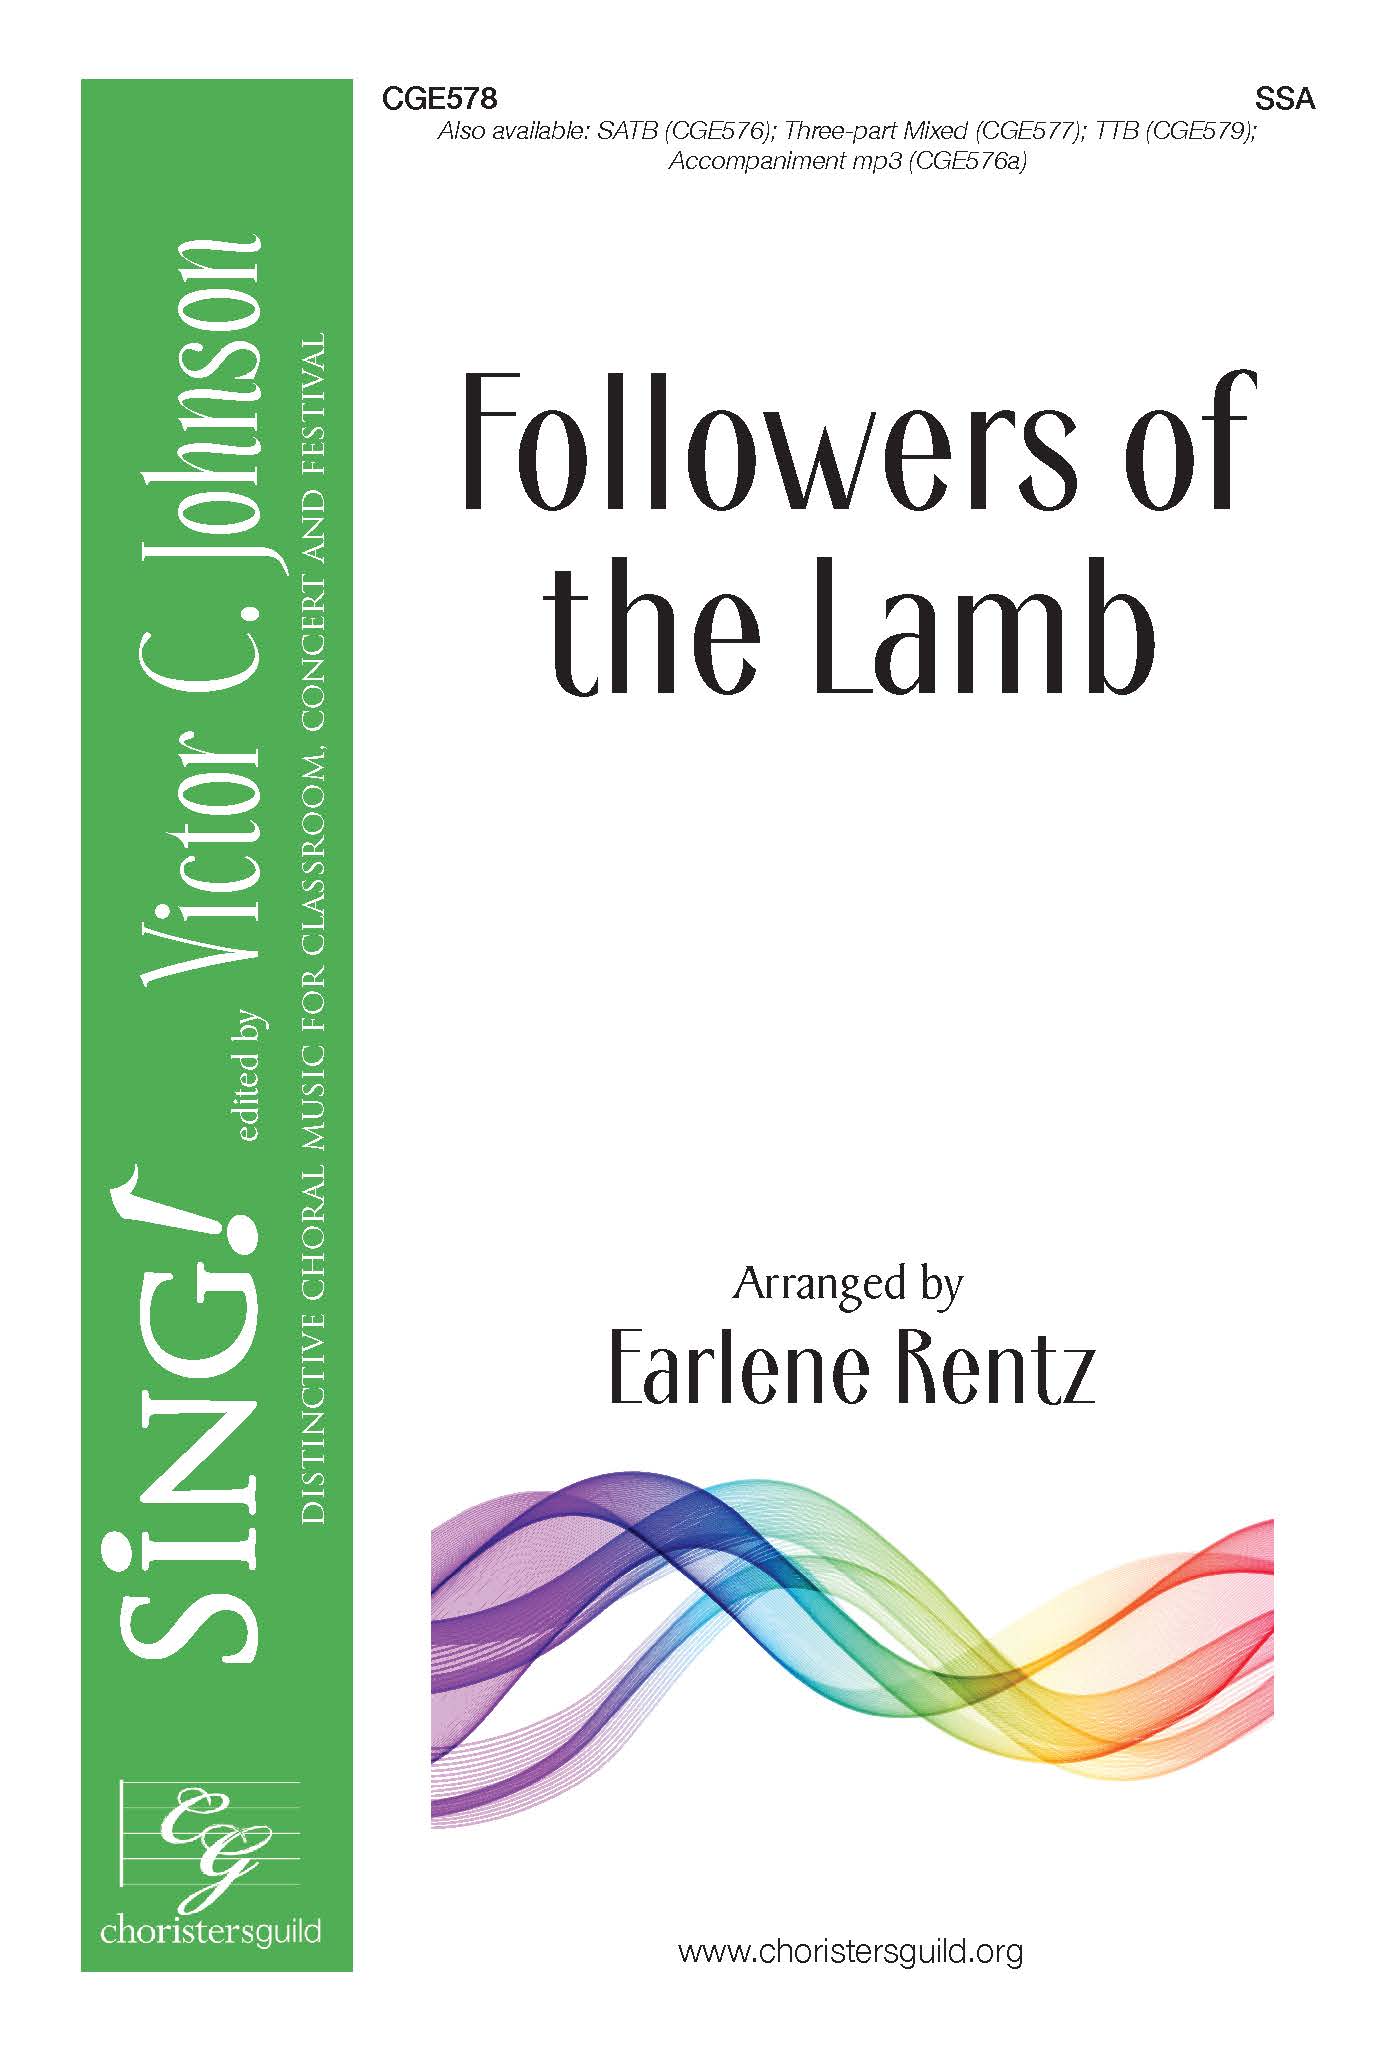 Followers of the Lamb - SSA